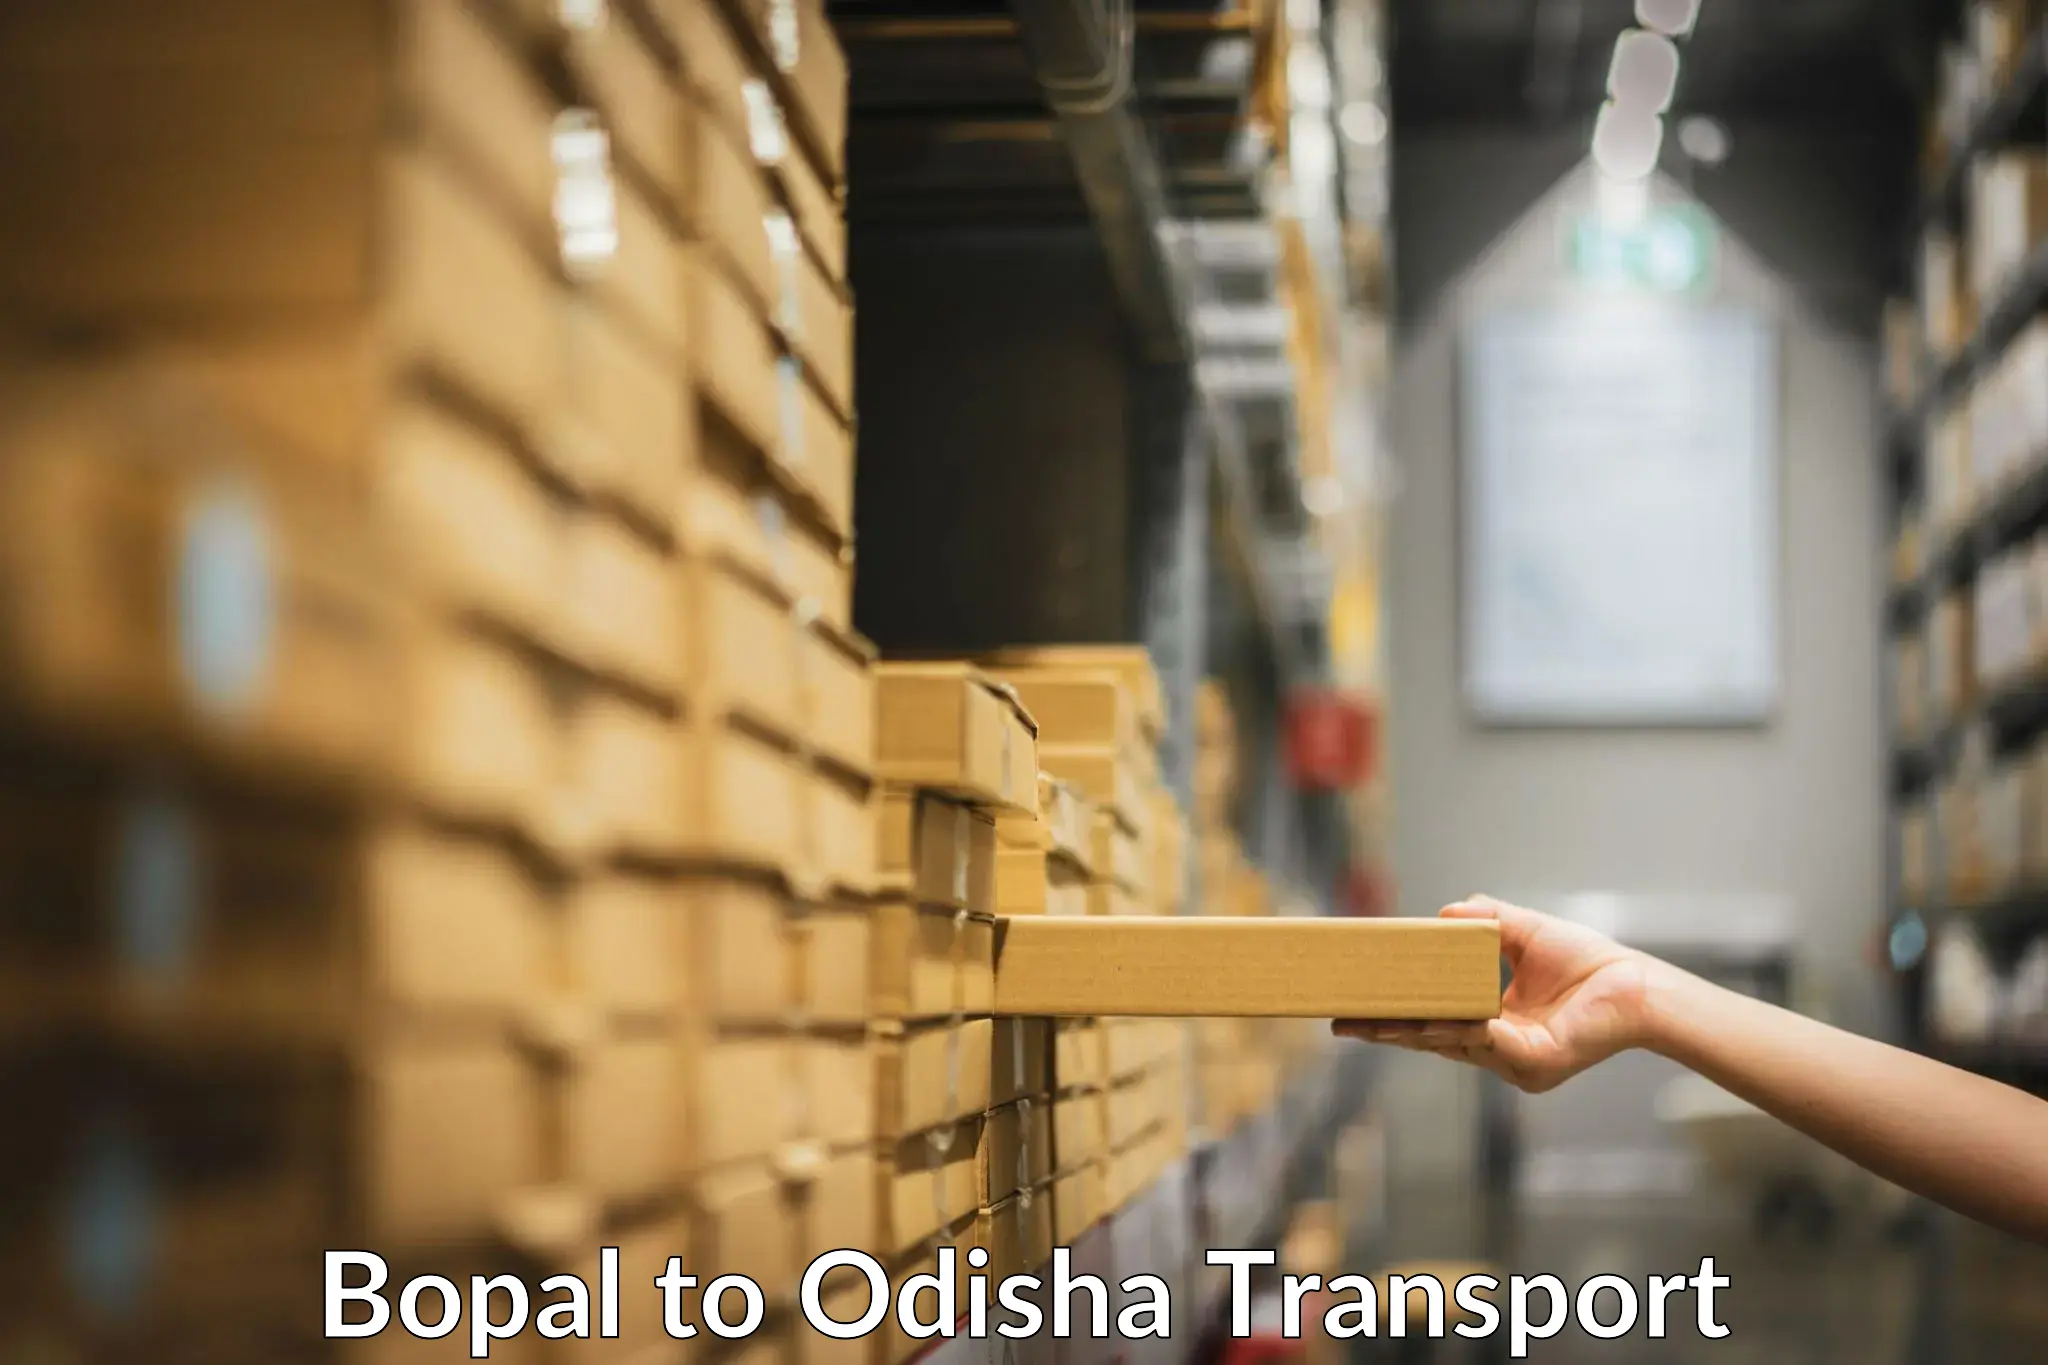 Cycle transportation service Bopal to Odisha